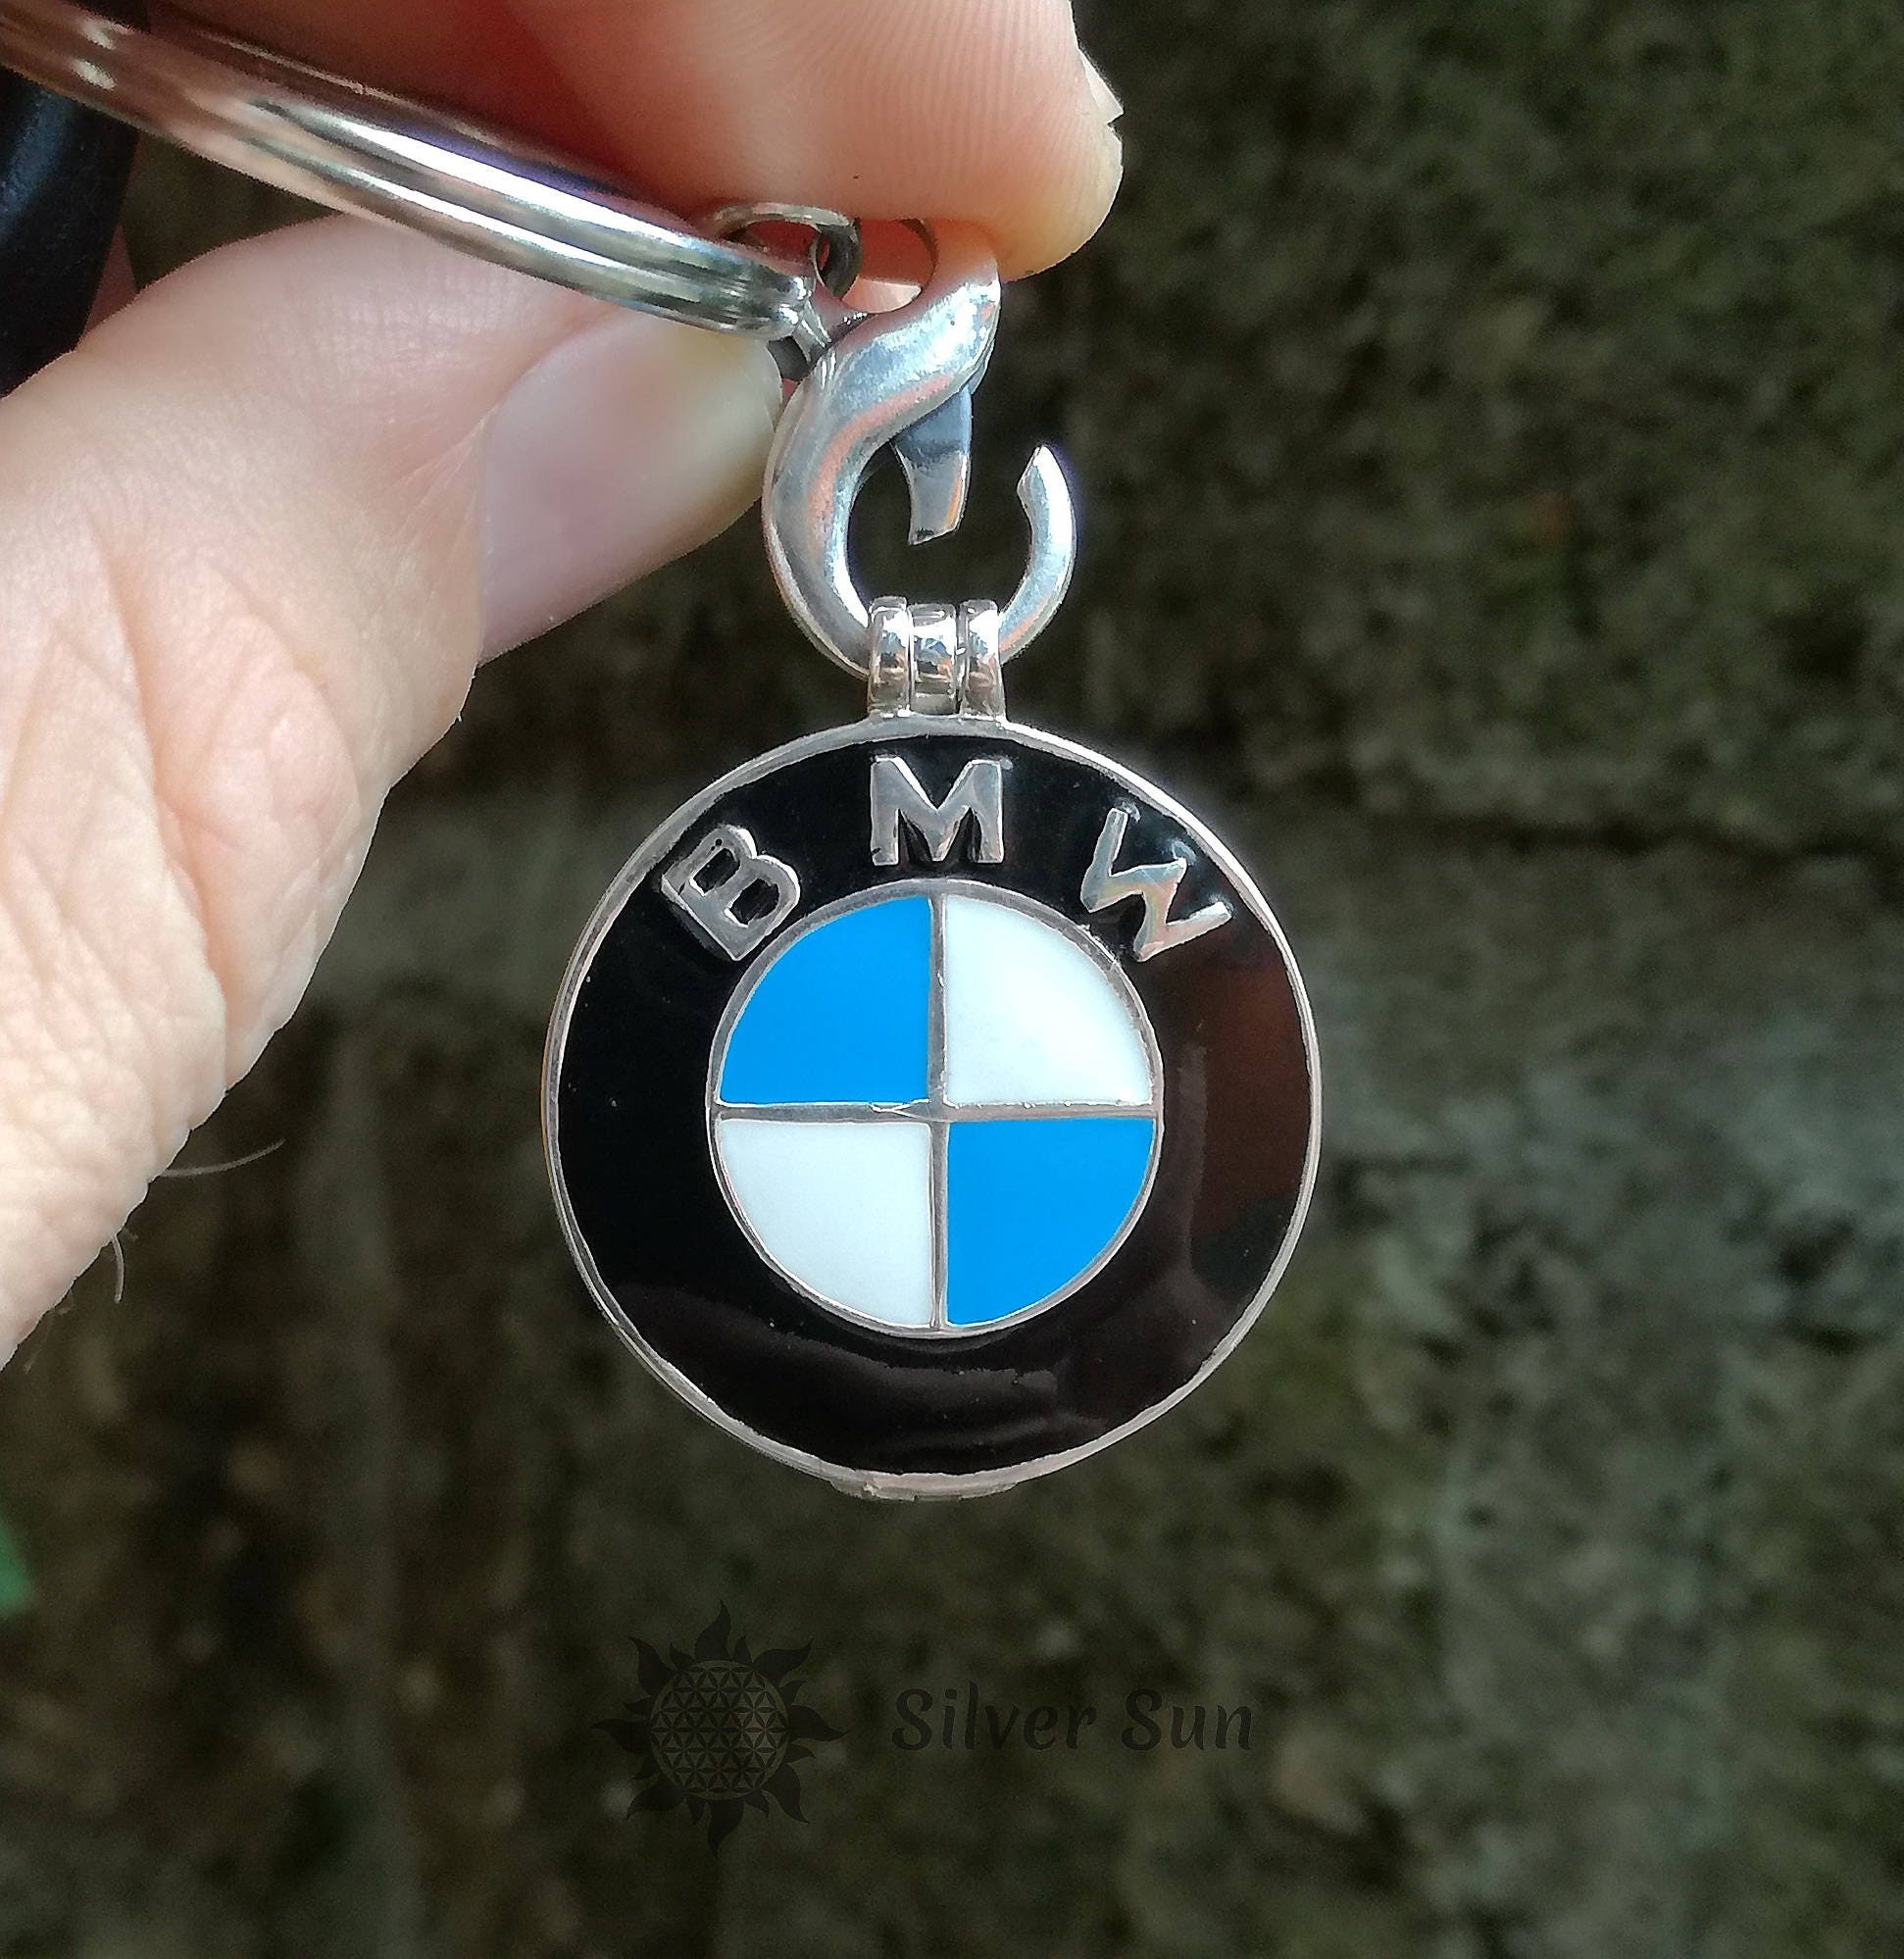 Silver Bmw Keychain 